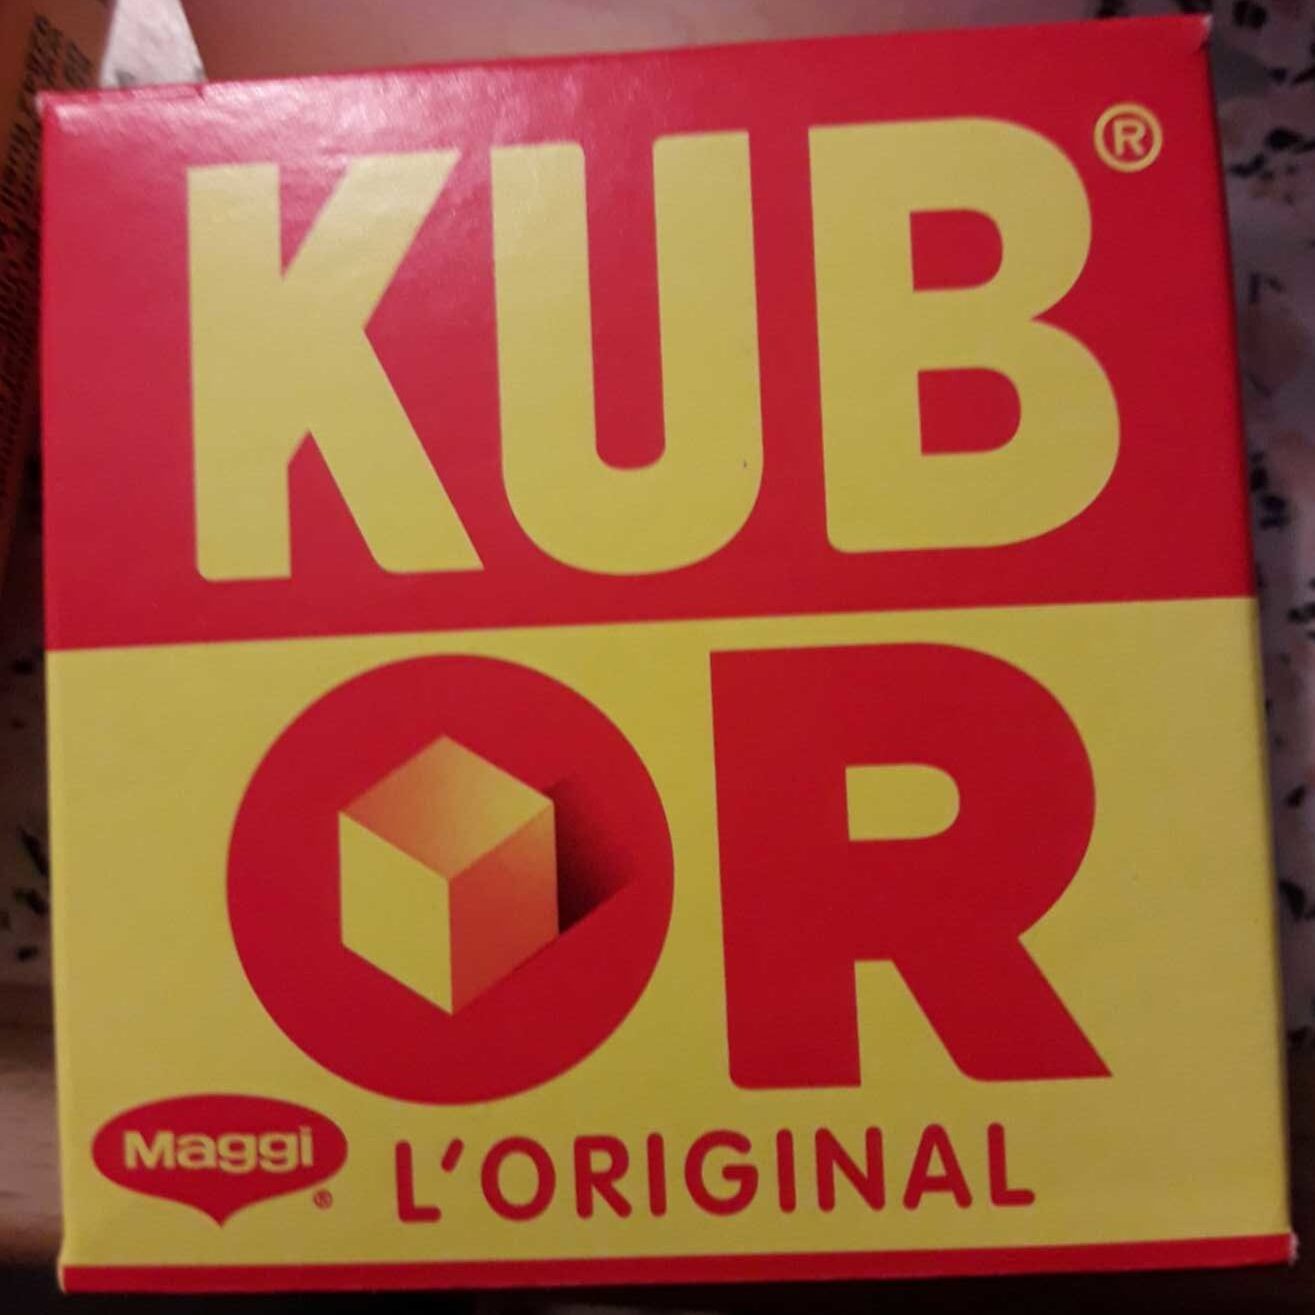 Kub Or, l'Original - Maggi - Product - fr